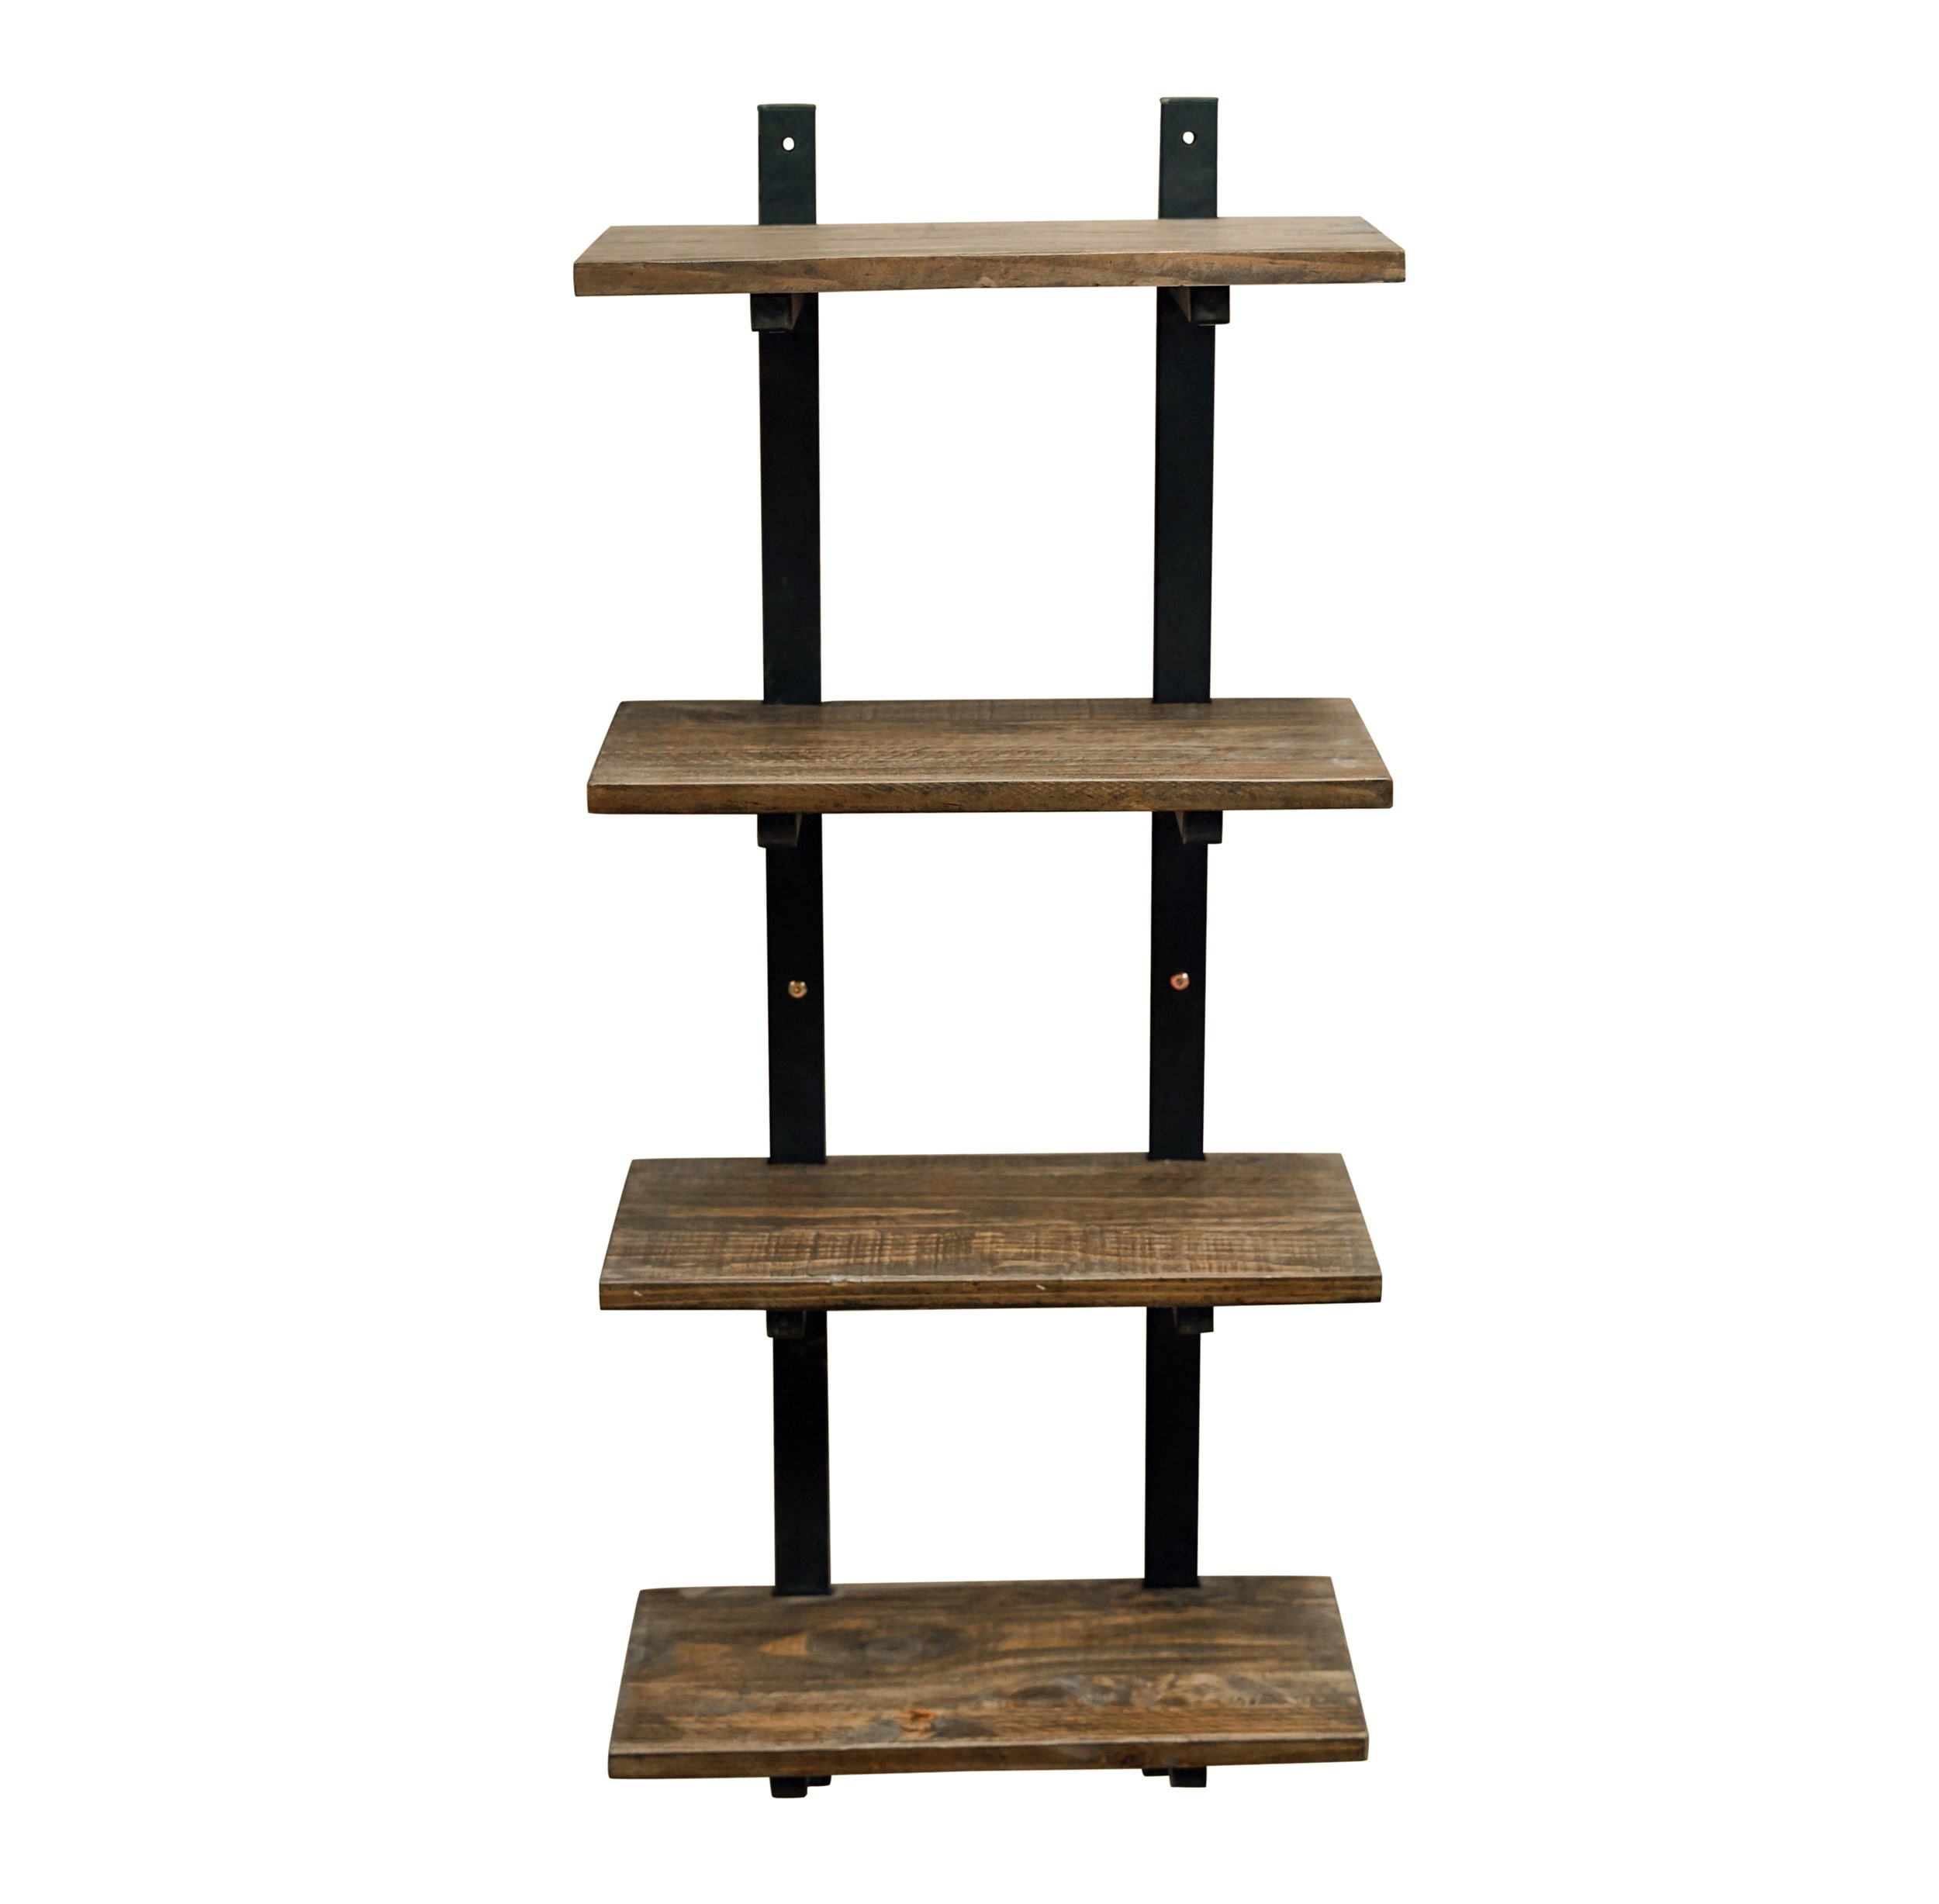  48 Unfinished Peg Rack With Shelf : Handmade Products